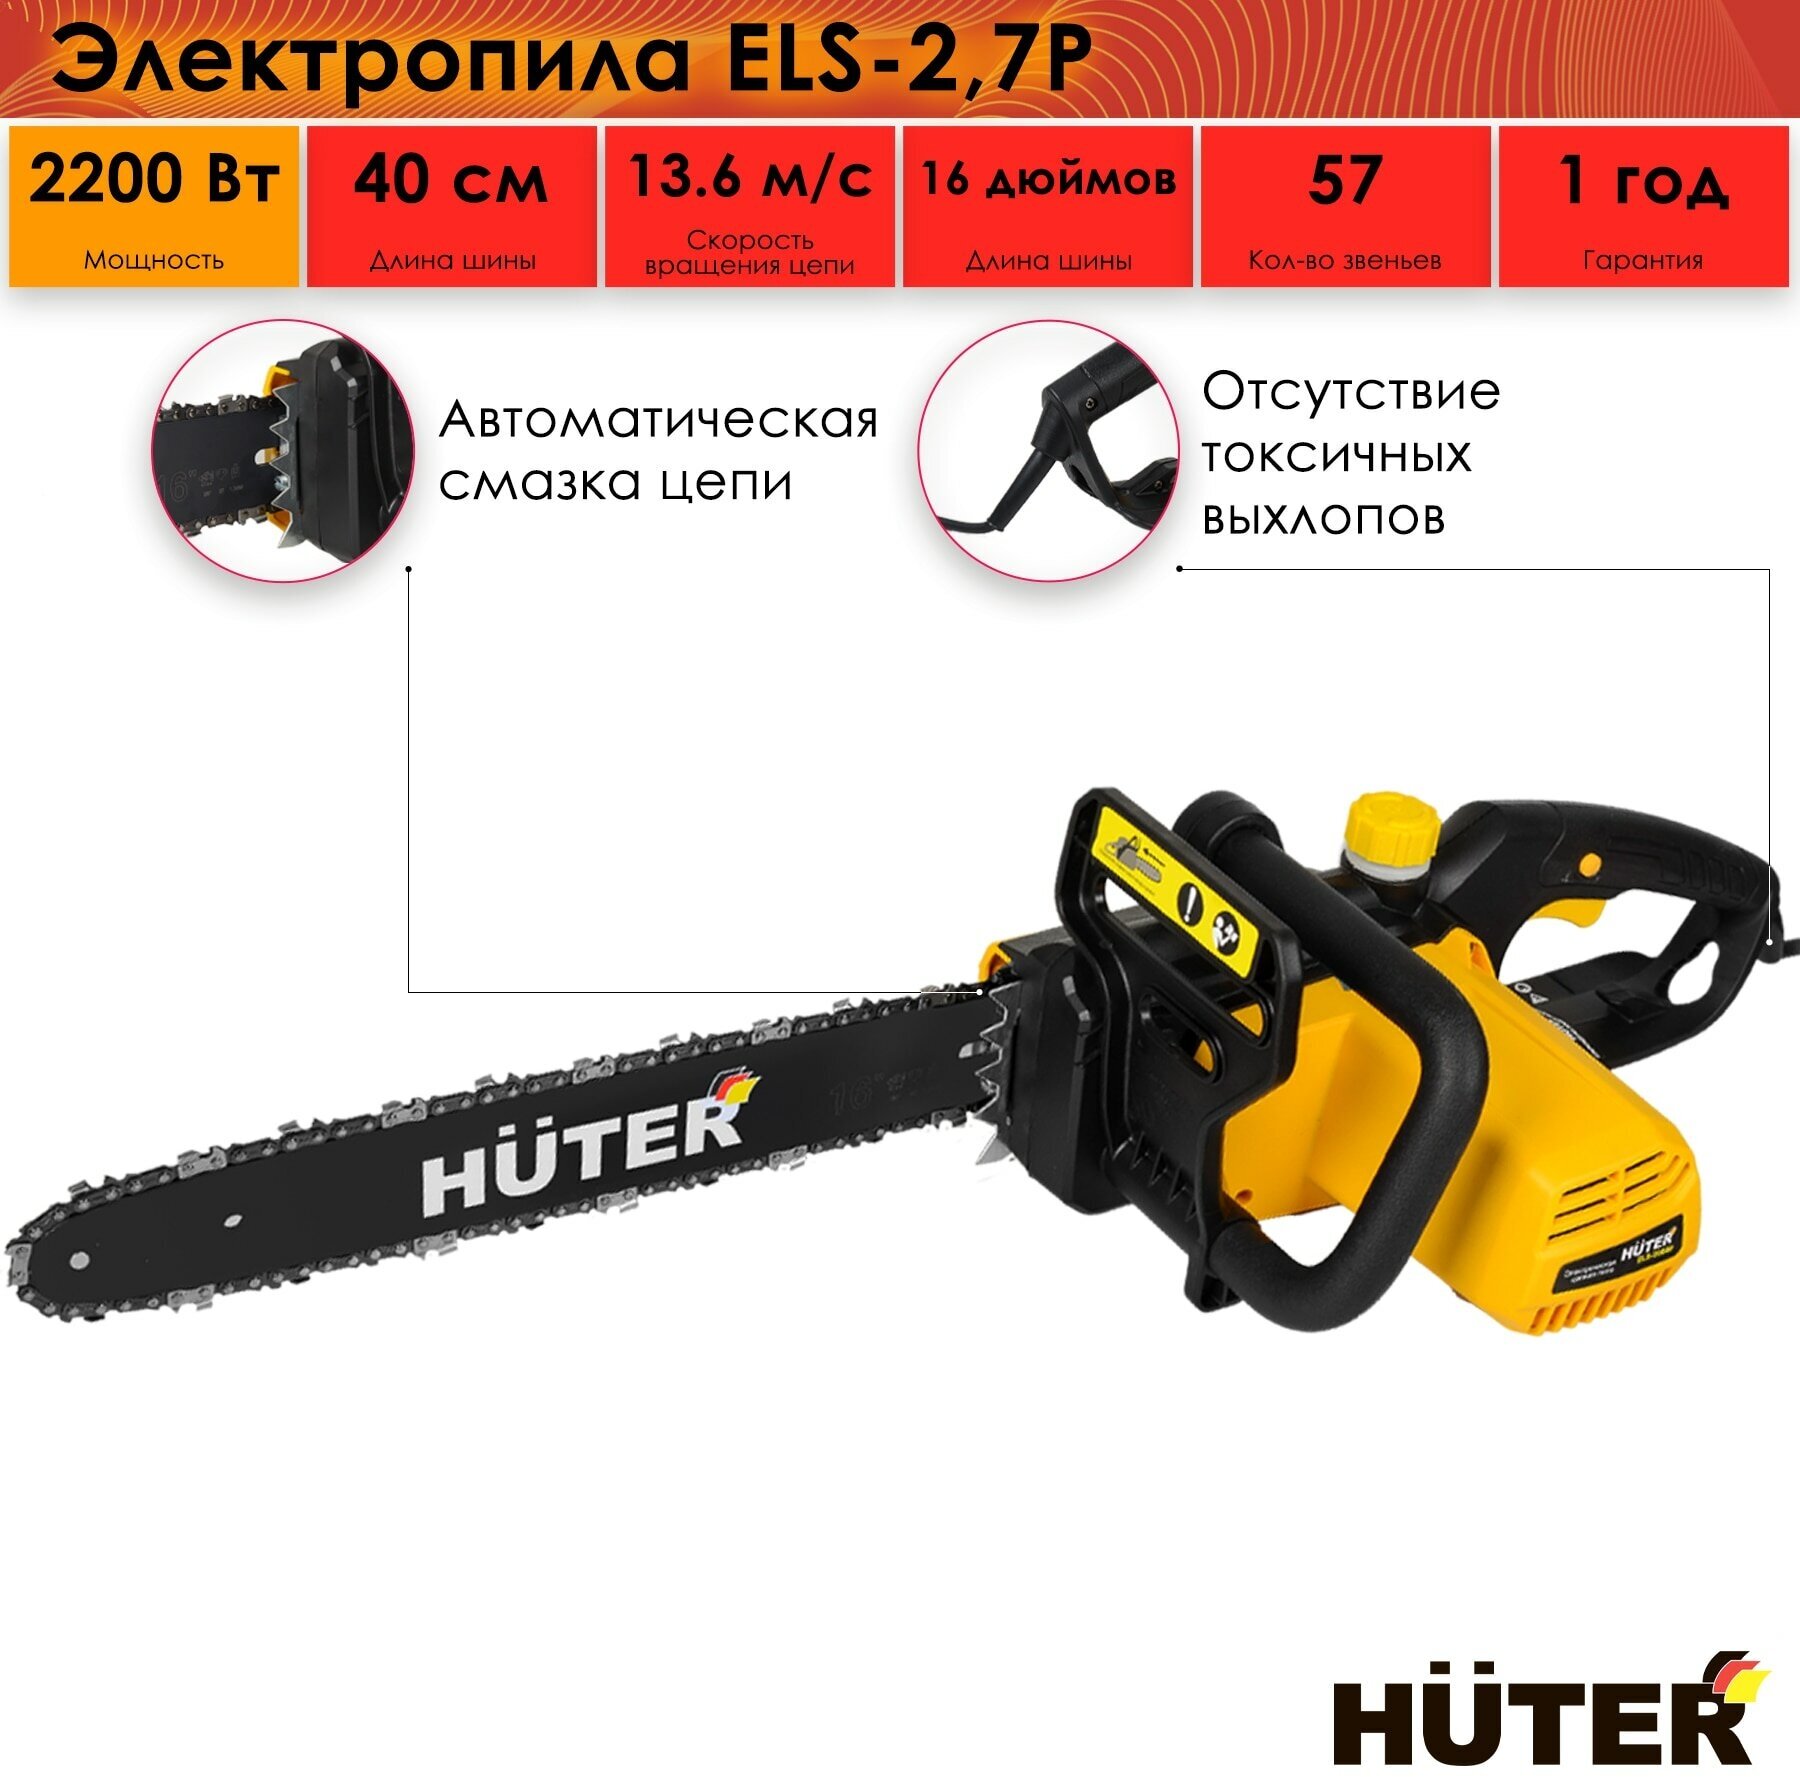 Электропила Huter ELS-2,7P, 2000 Вт